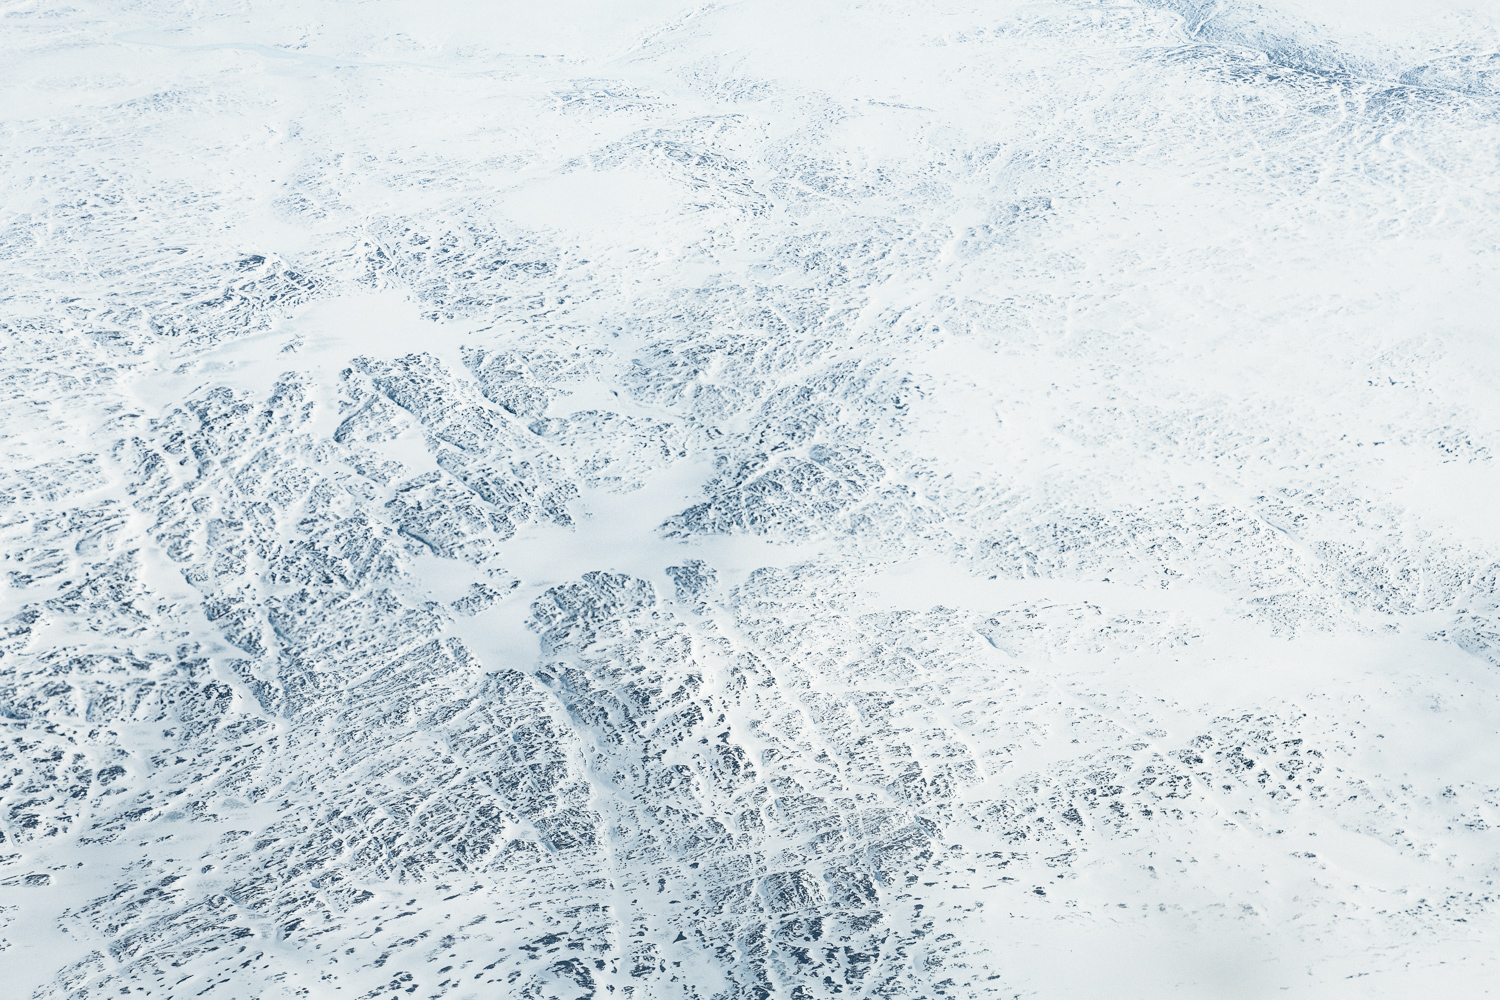  Greenland VIII, 2013 //  80 cm x 120 cm  